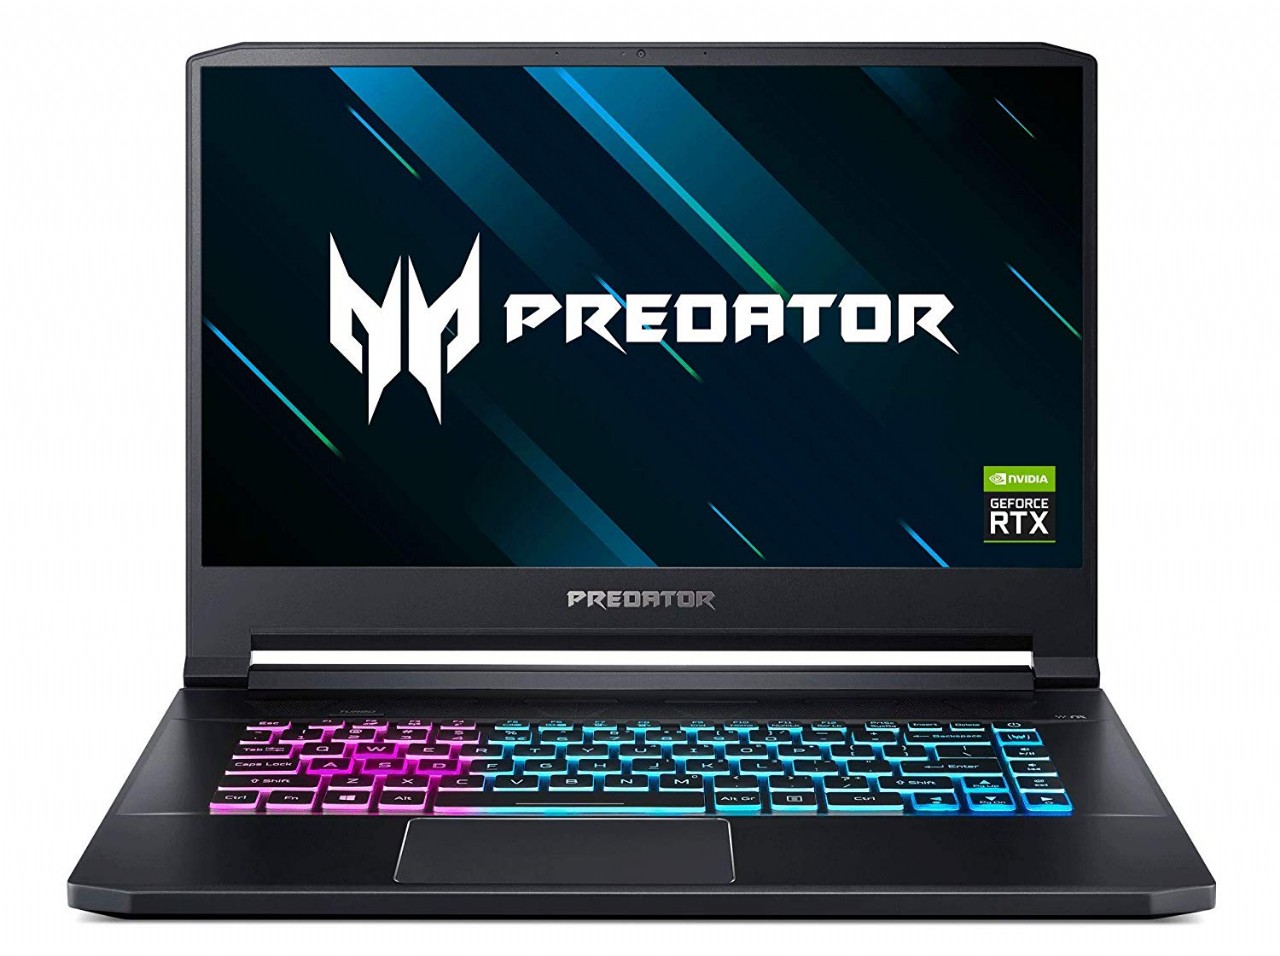 Acer Predator Triton 500 Thin & Light Gaming Laptop, Intel Core i7-9750H, GeForce RTX 2060 with 6GB,